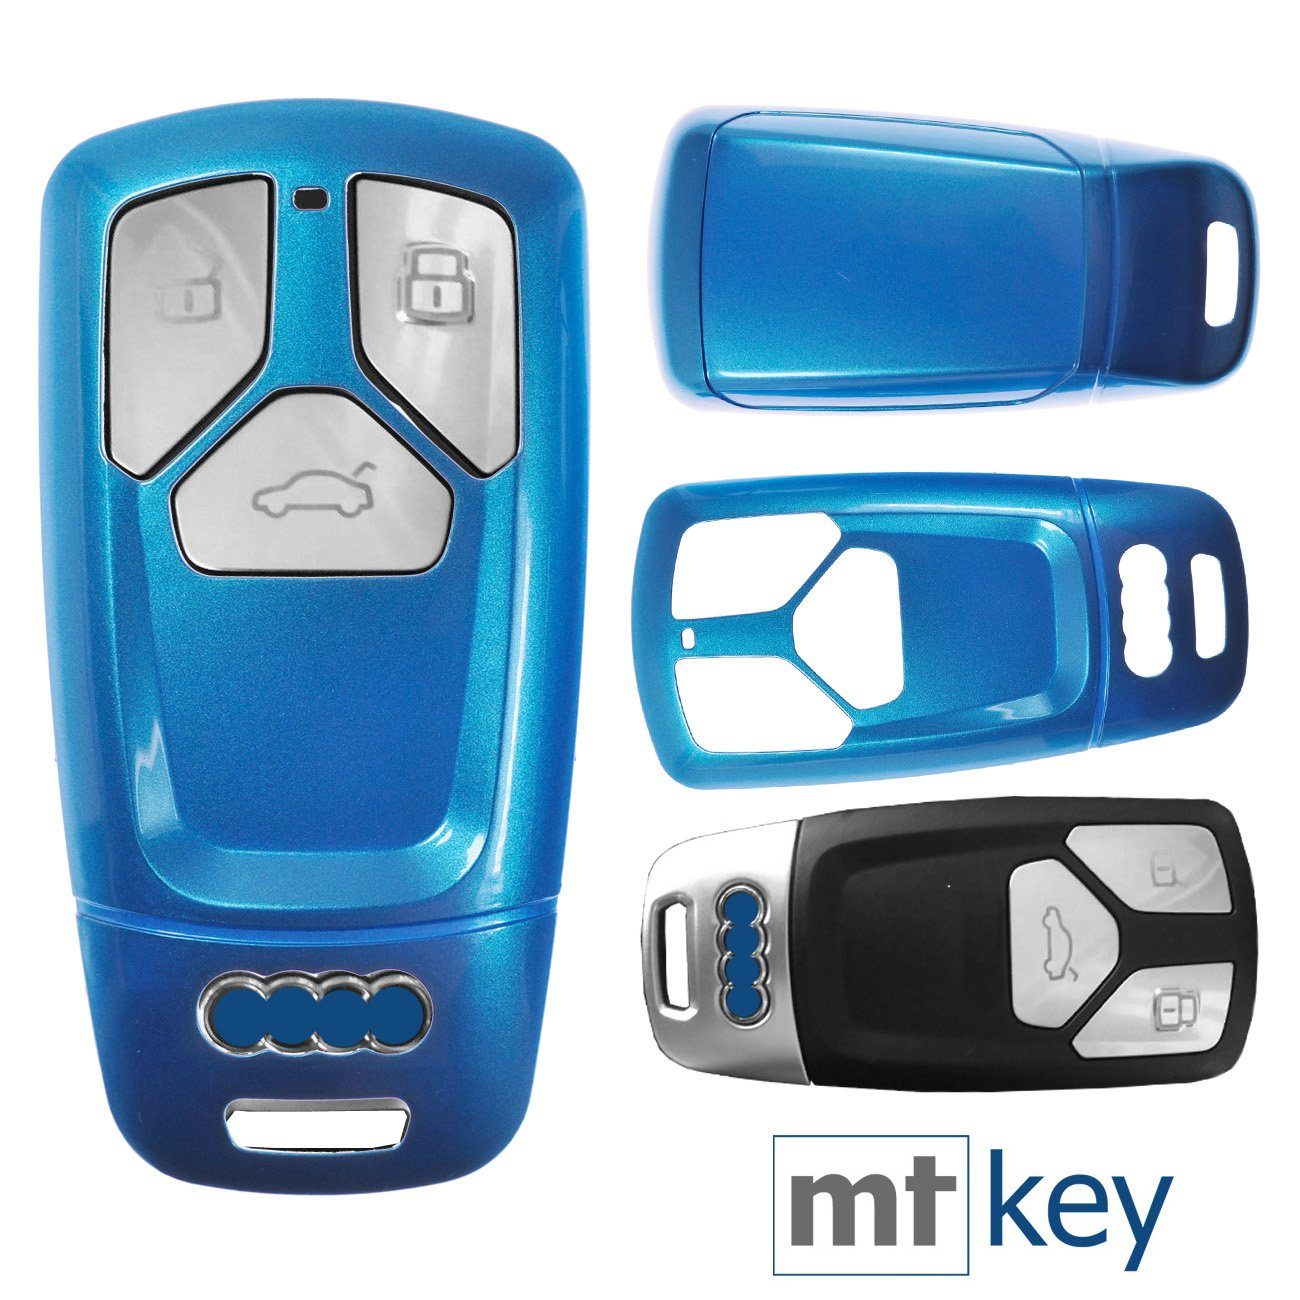 mt-key Schlüsseltasche Autoschlüssel Hardcover Schutzhülle Metallic Blue, für Audi A4 A5 A6 A7 TT Q2 Q5 Q7 A8 Q8 KEYLESS SMARTKEY Metallic Blau